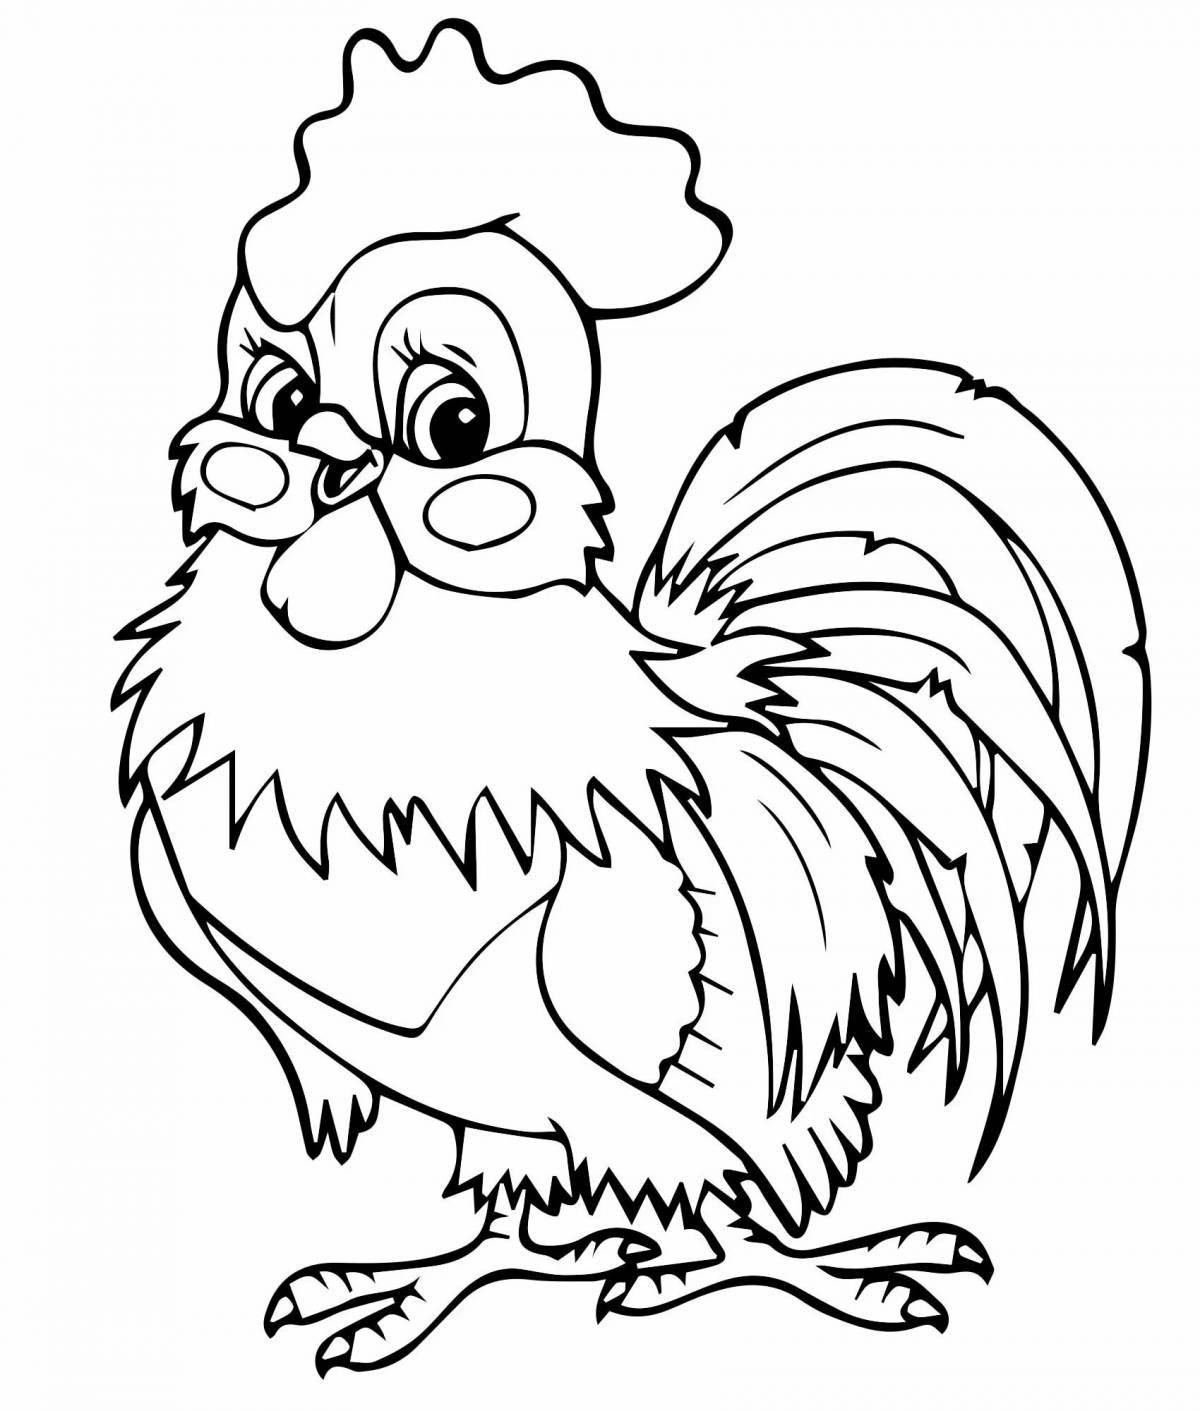 Artistic drawing of a cockerel